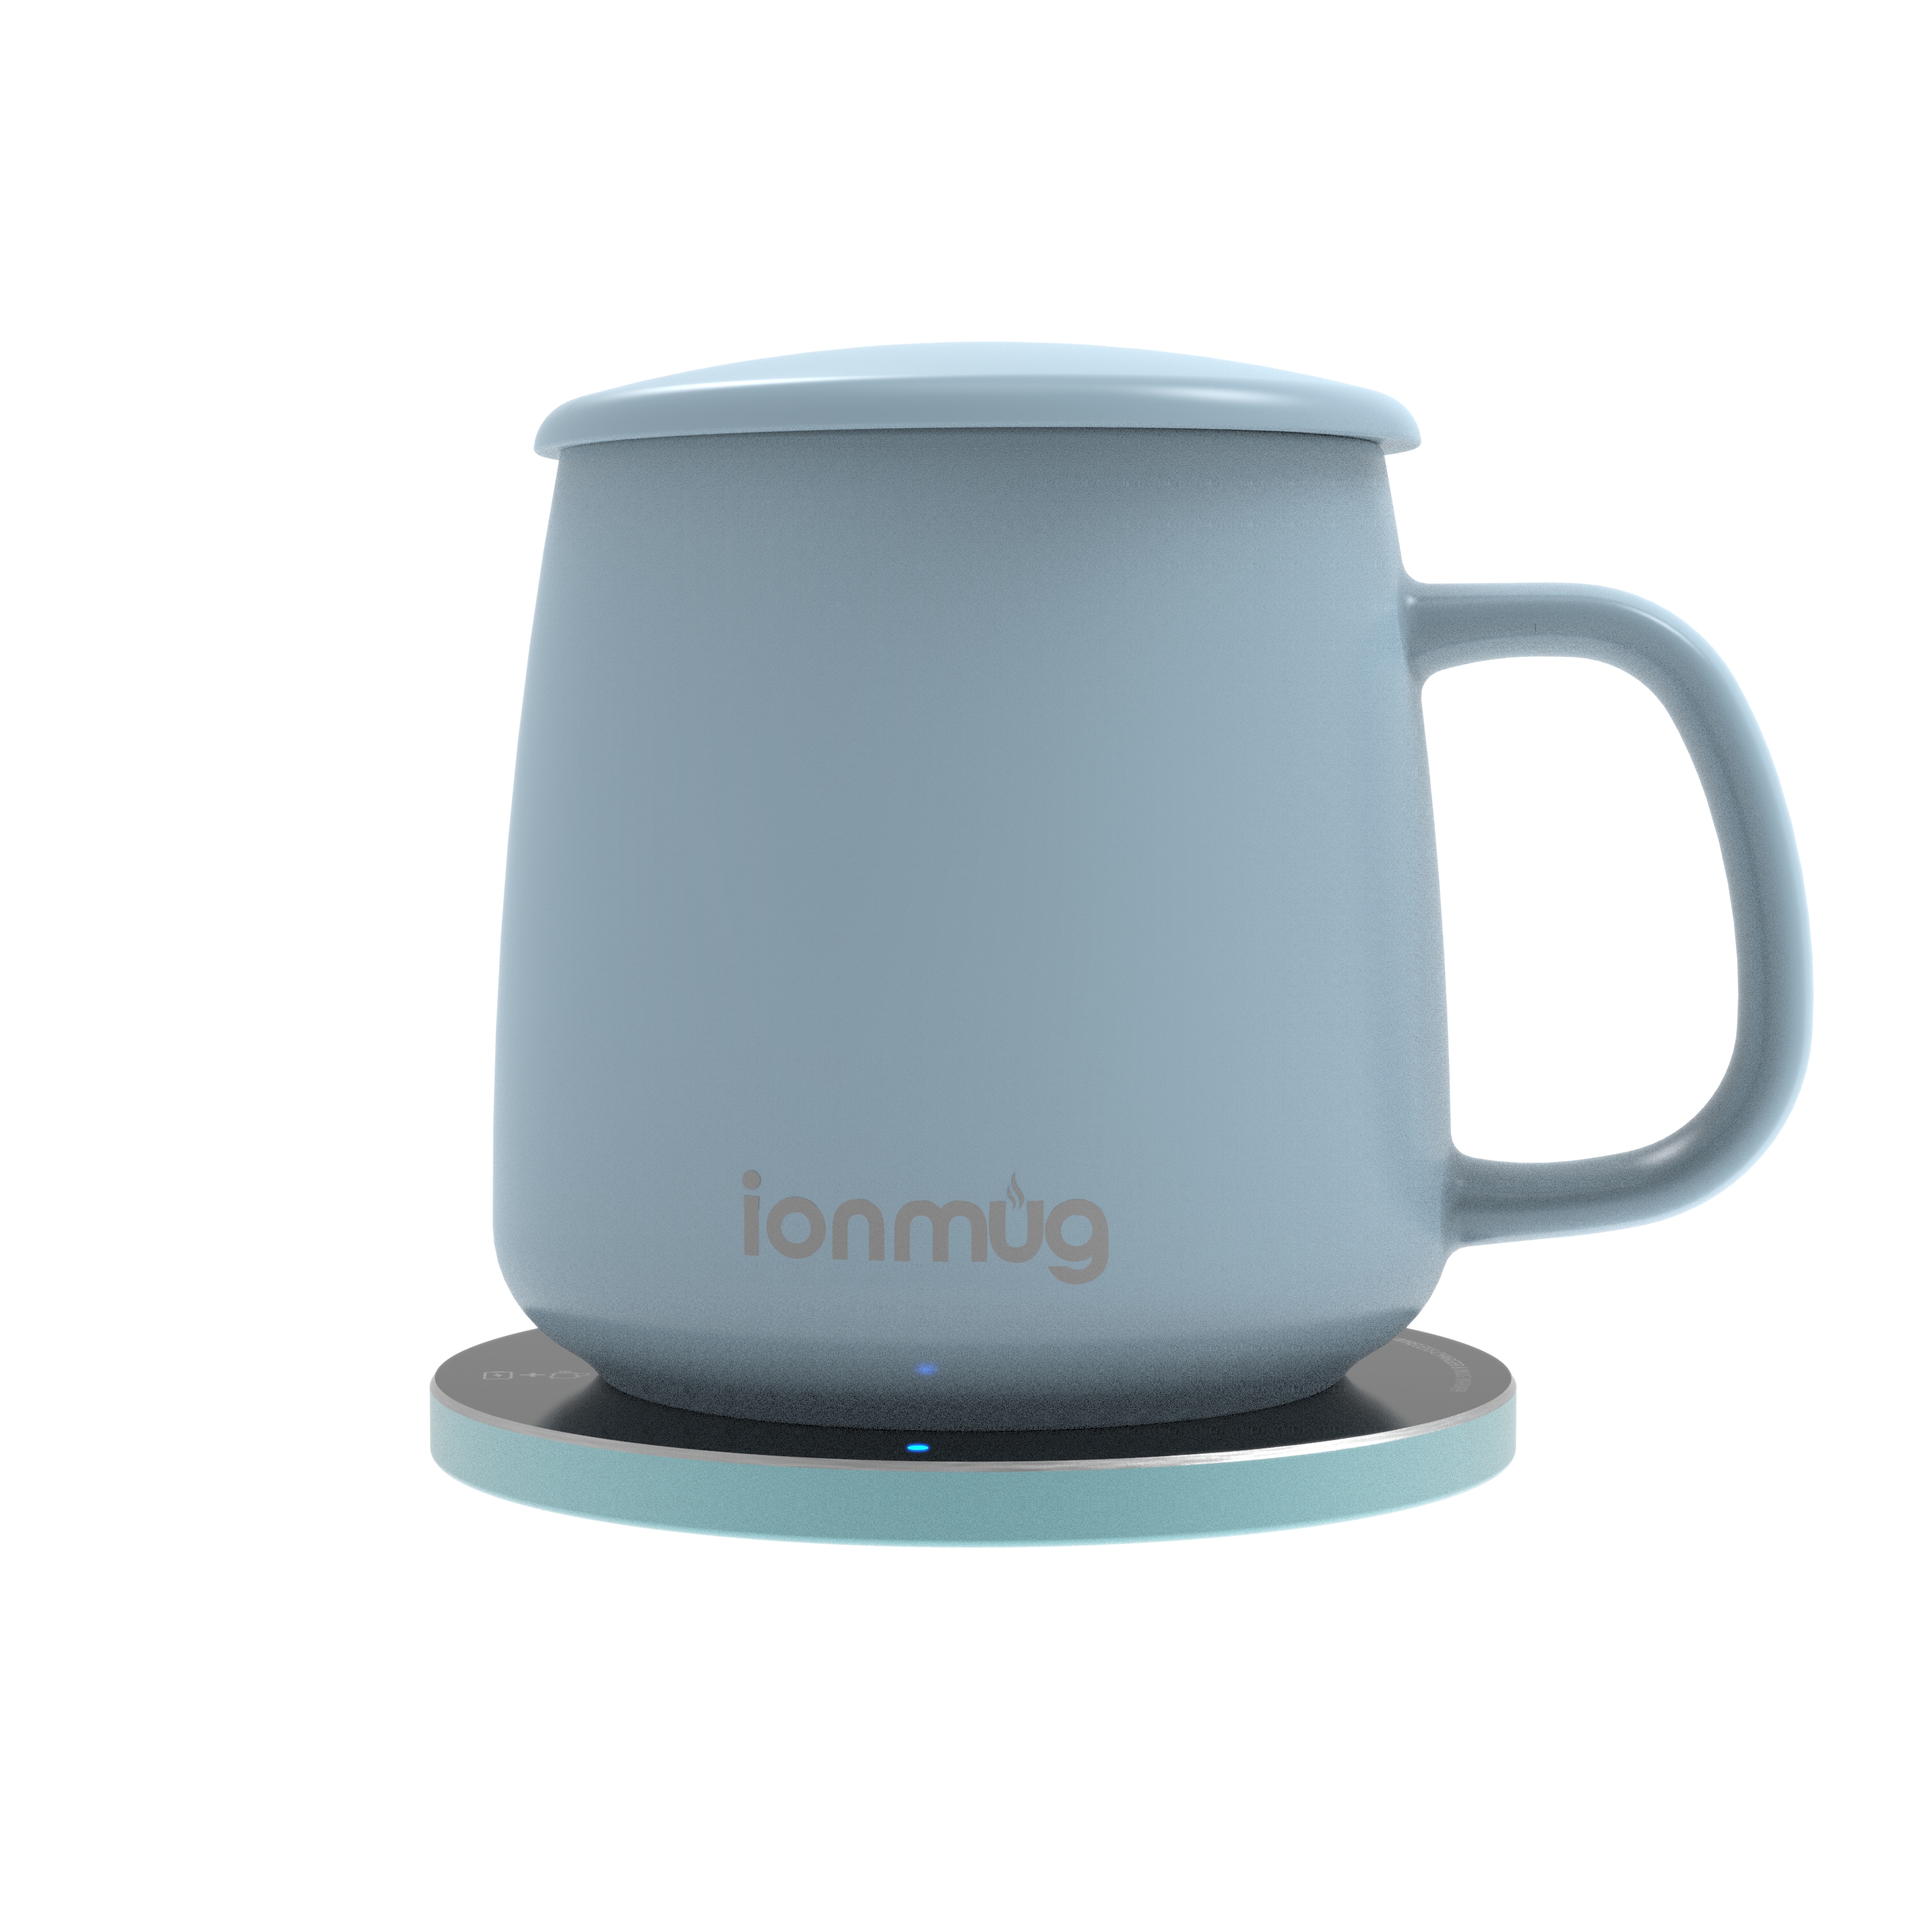 NEW ionMug Heated Ceramic Coffee Mug with Wireless Charging